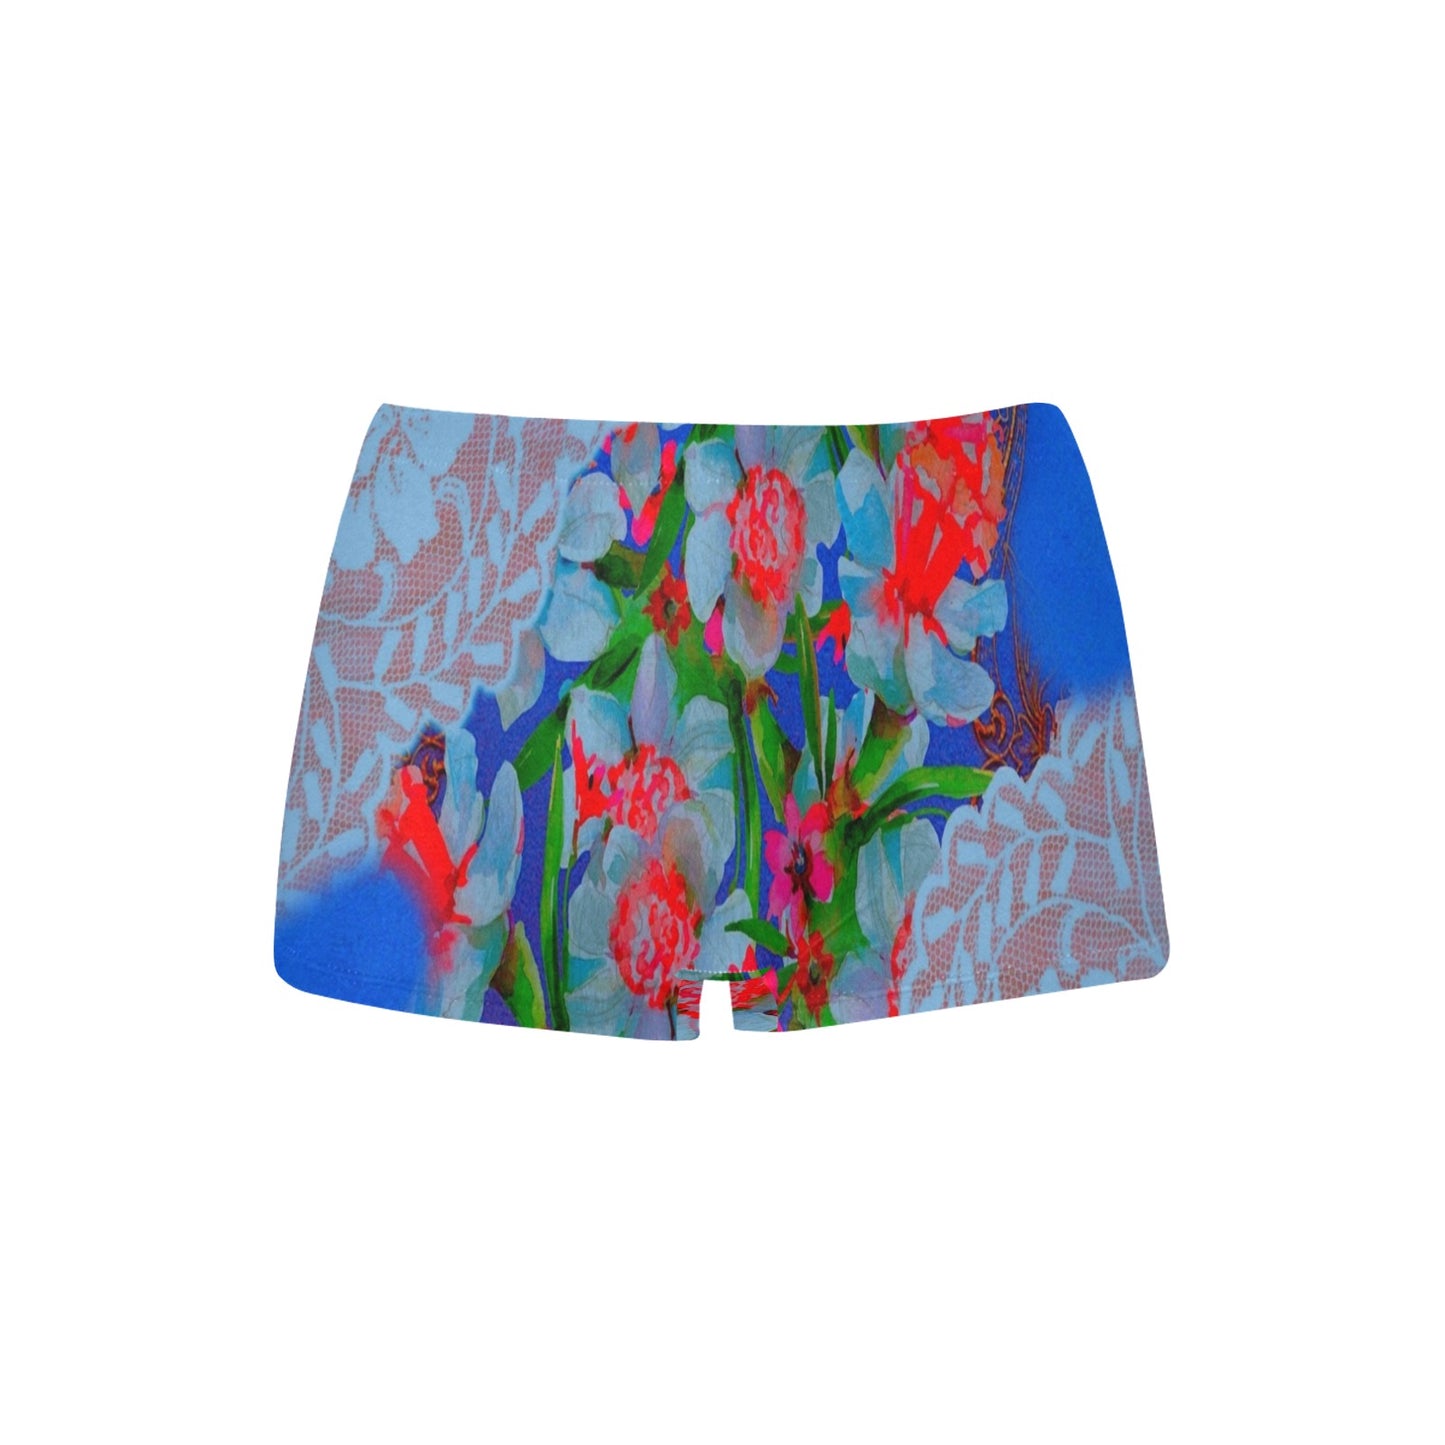 Printed Lace Boyshorts, daisy dukes, pum pum shorts, shortie shorts , design 46